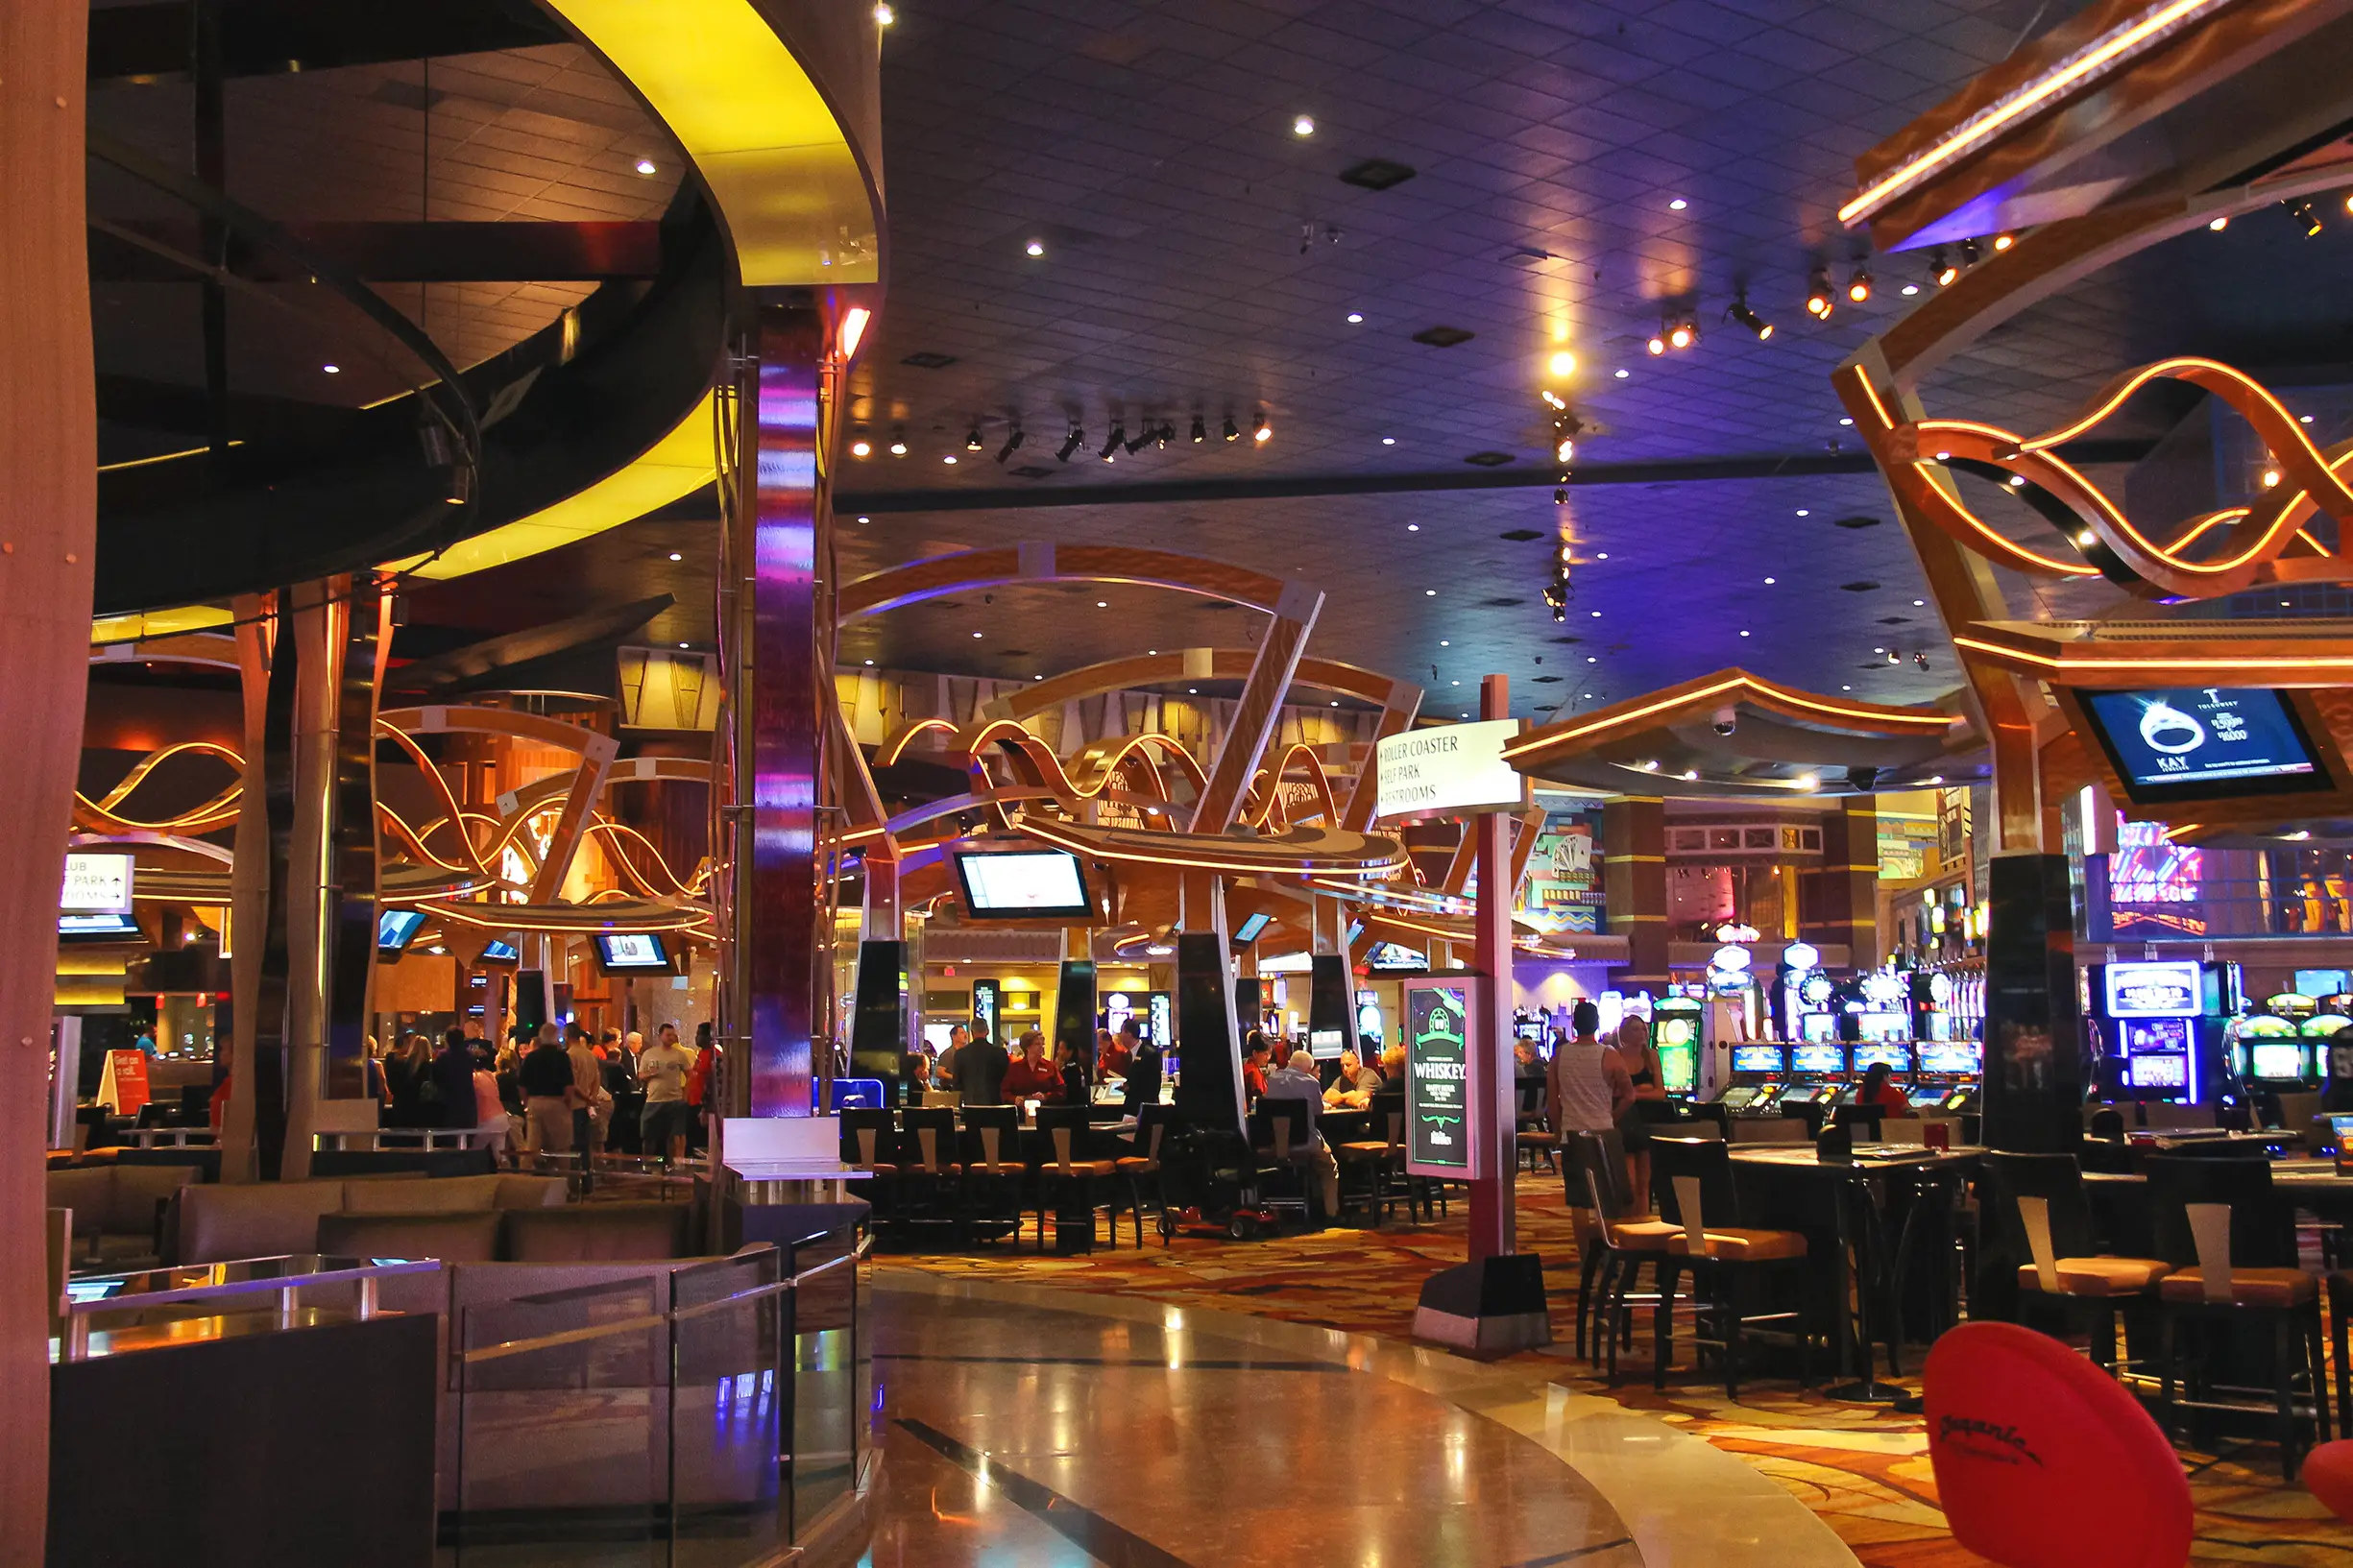 Casino in New York-New York Hotel and Casino in Las Vegas .